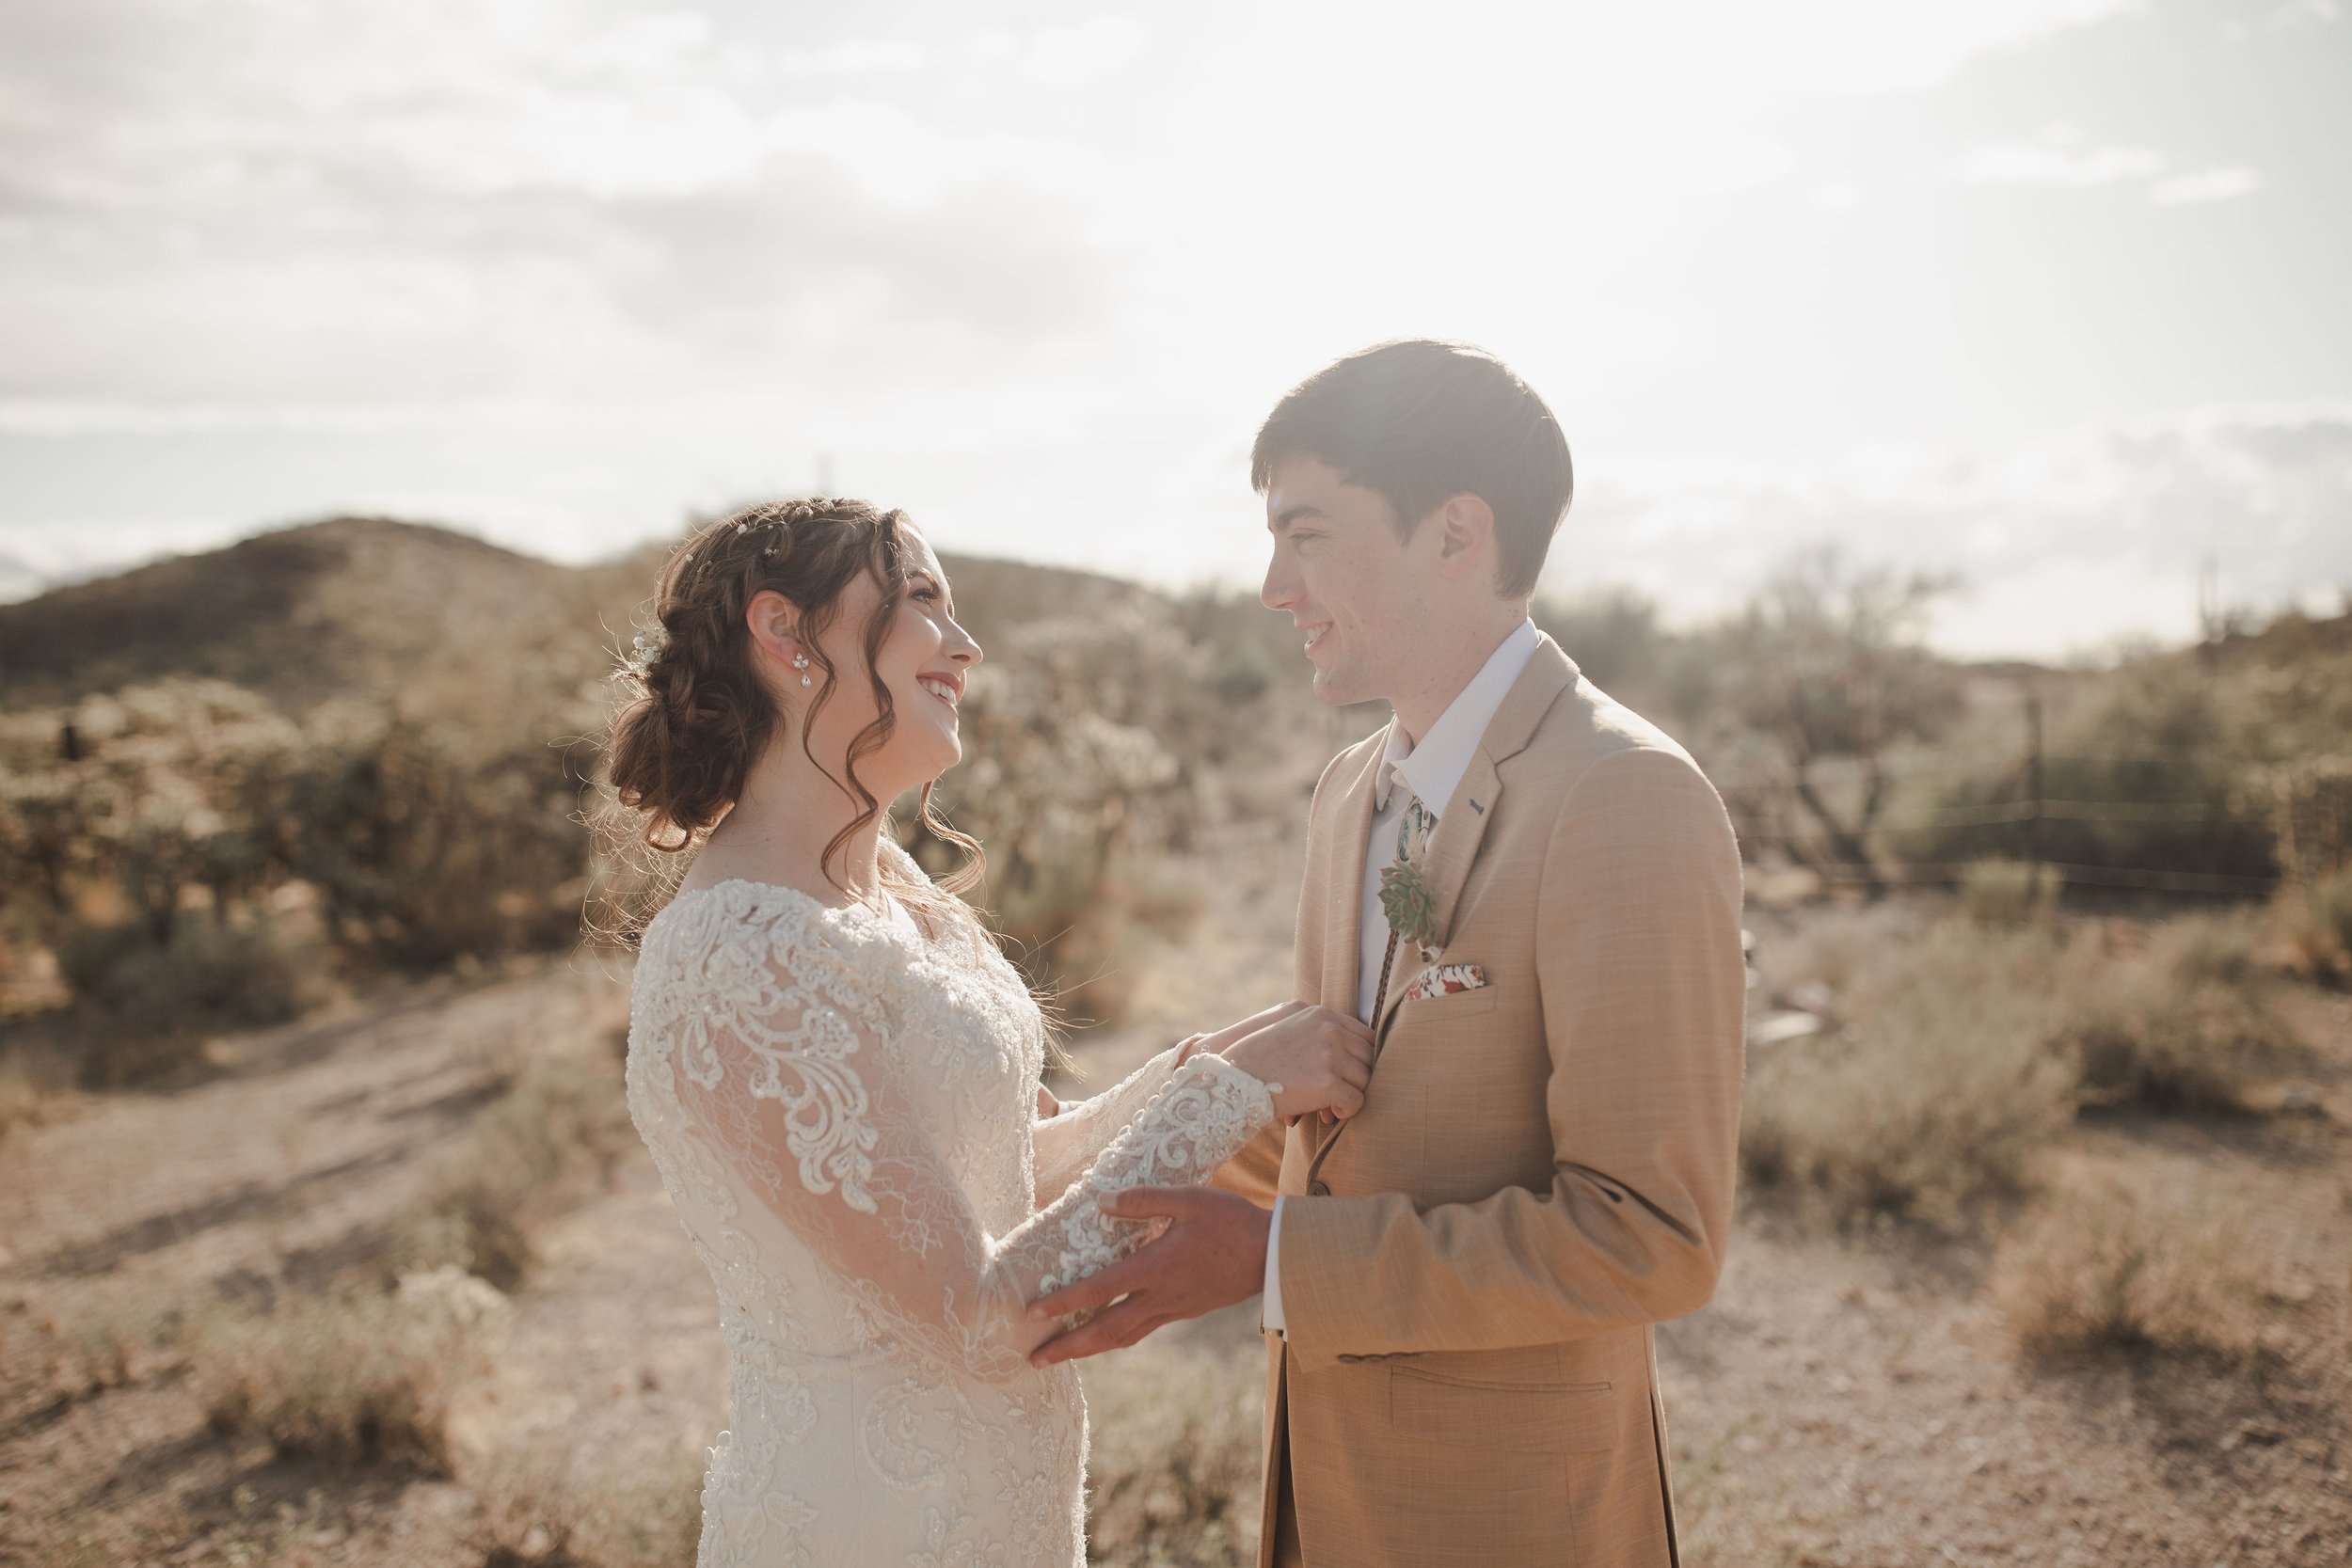 Intimate Desert Wedding at the Superstition Mountains | Arizona Wedding Photographer25.jpg